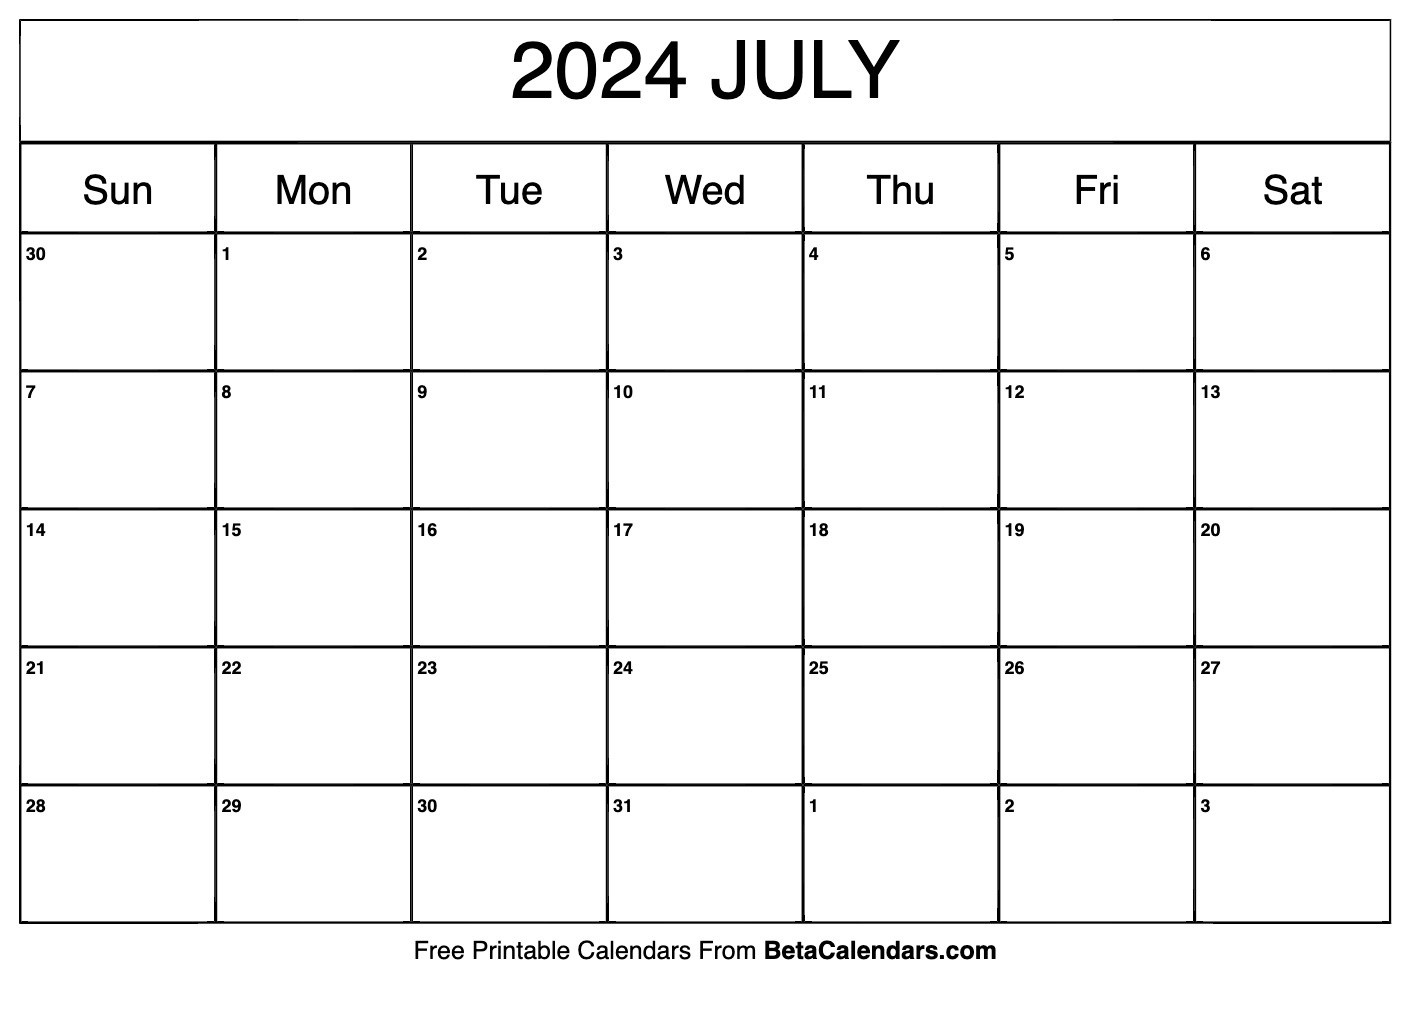 Free Printable July 2024 Calendar regarding July 2024 Free Calendar